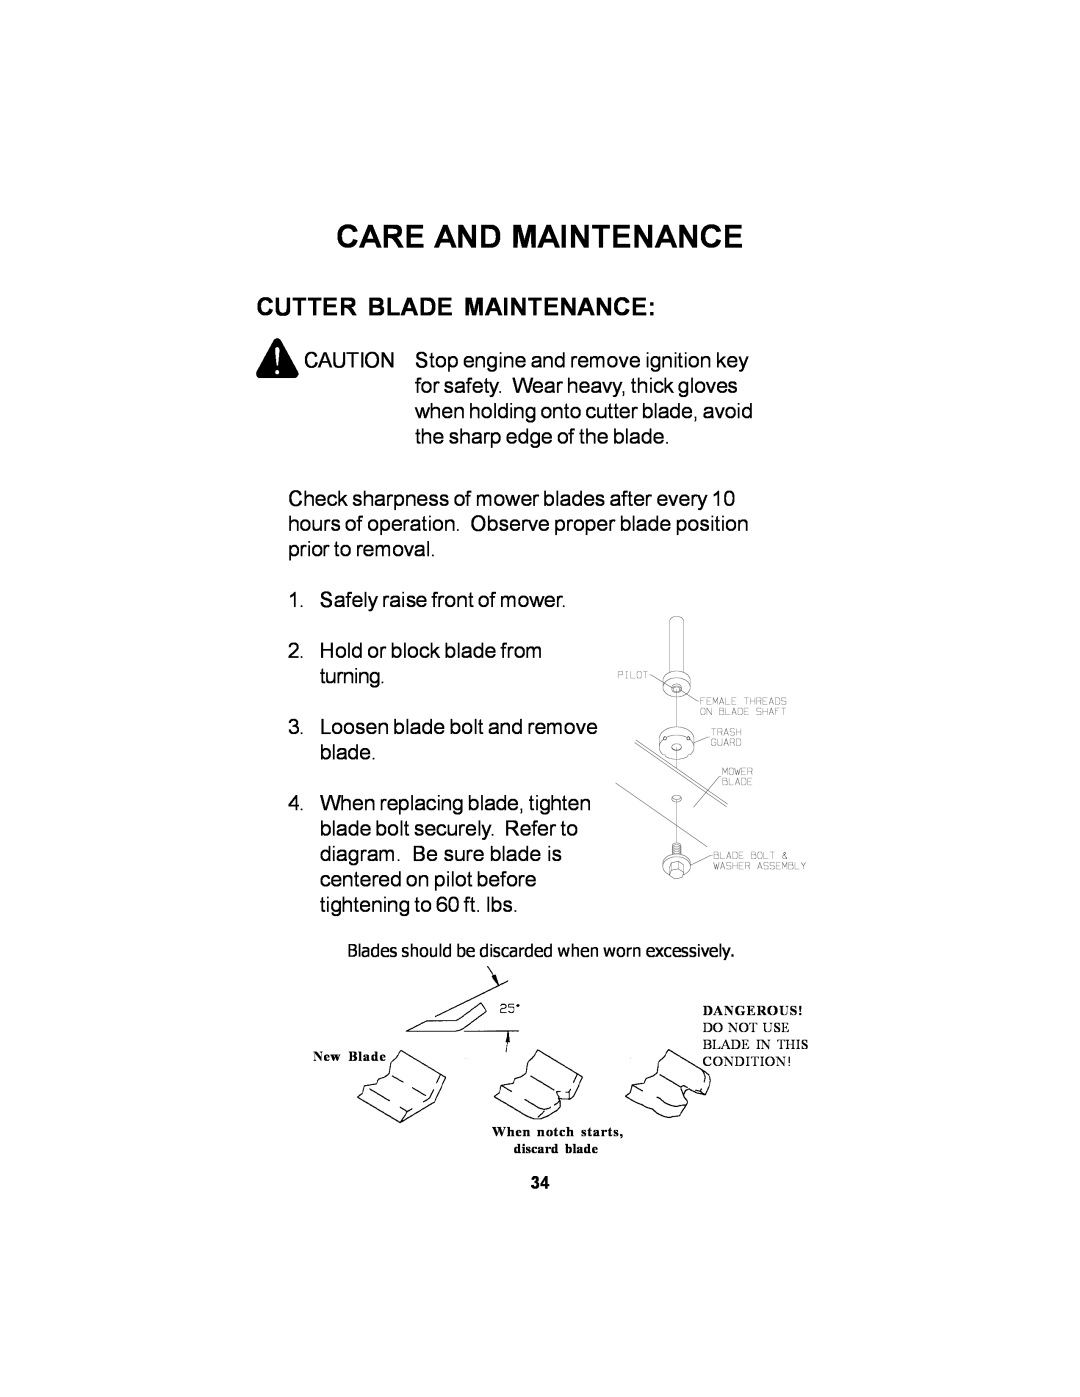 Dixon ELS 60 manual Cutter Blade Maintenance, Care And Maintenance 